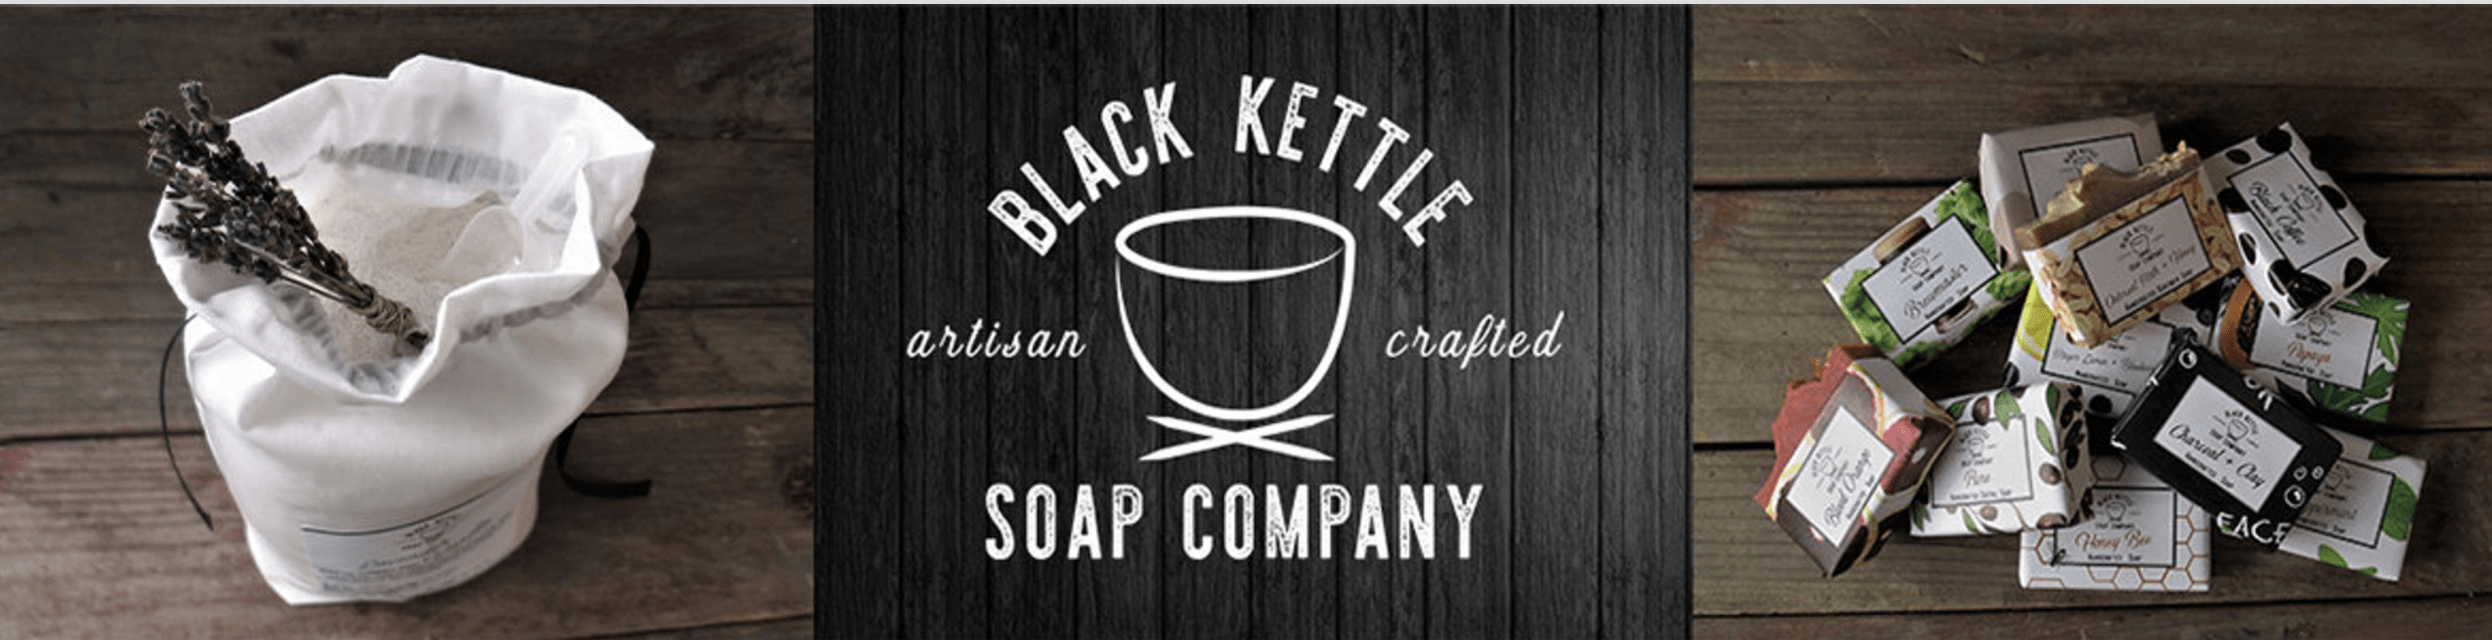 black kettle soap company